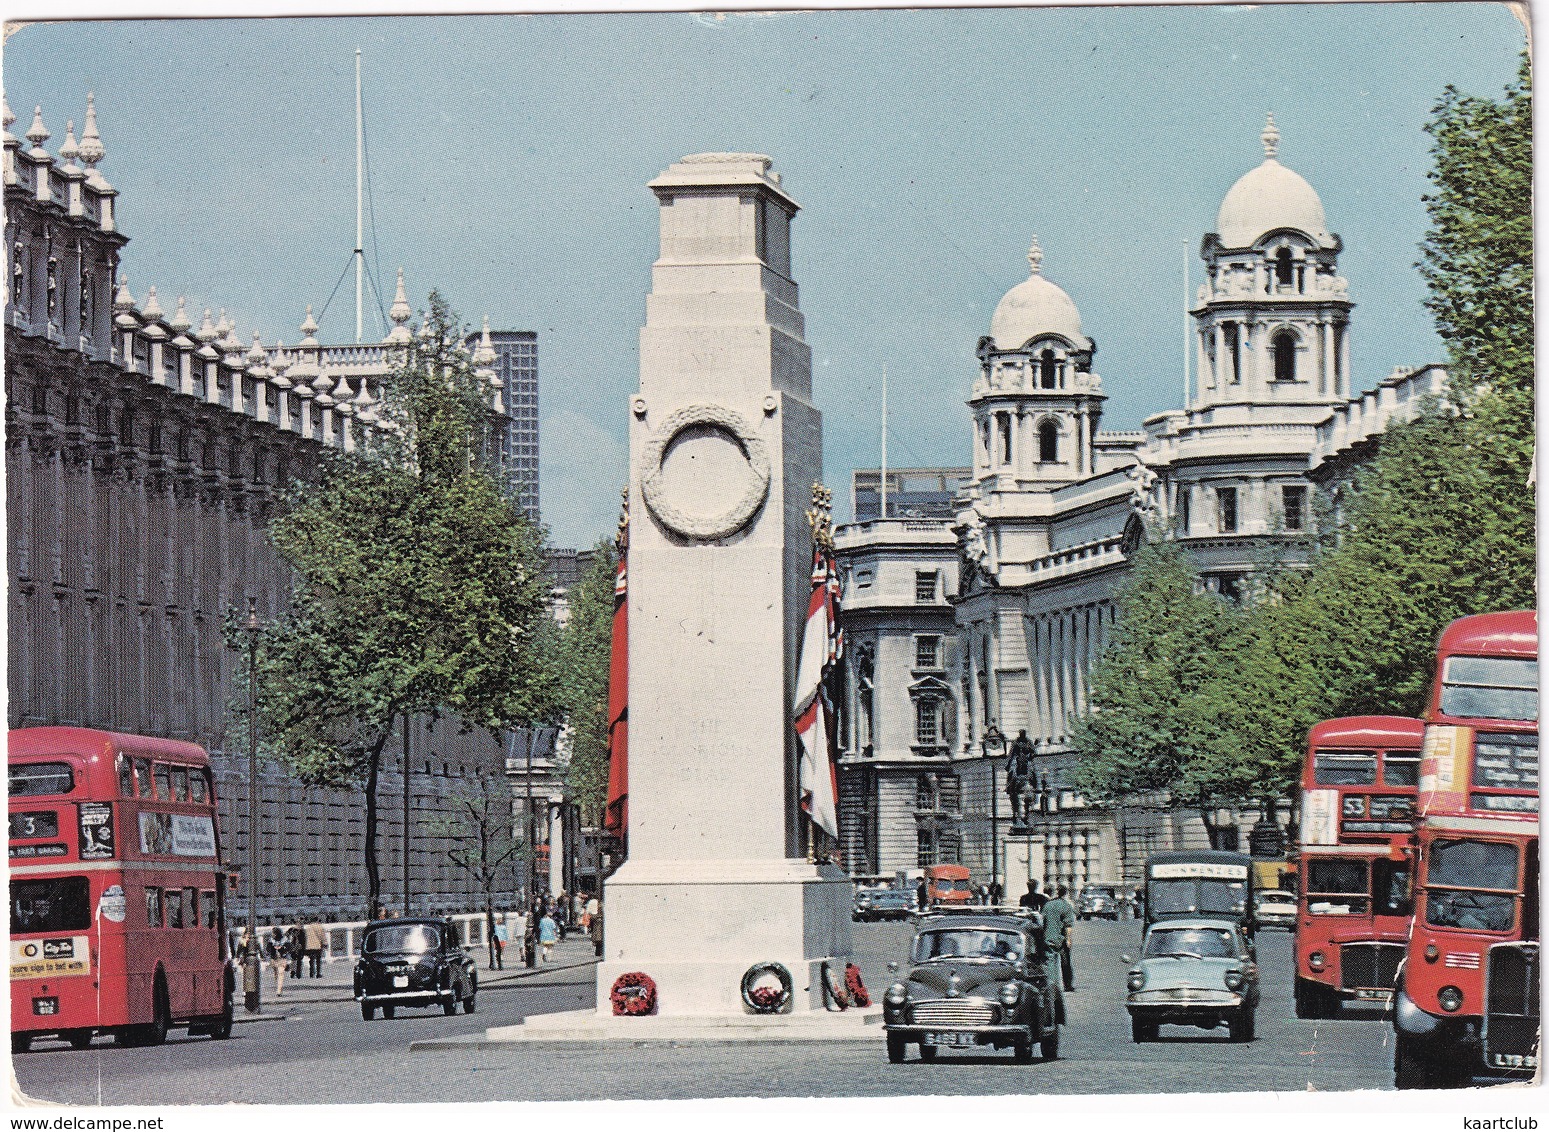 London: MORRIS MINOR, FORD ANGLIA, AUSTIN FX TAXI, DOUBLE DECK BUSES - Cenotaph, Whitehall - Turismo